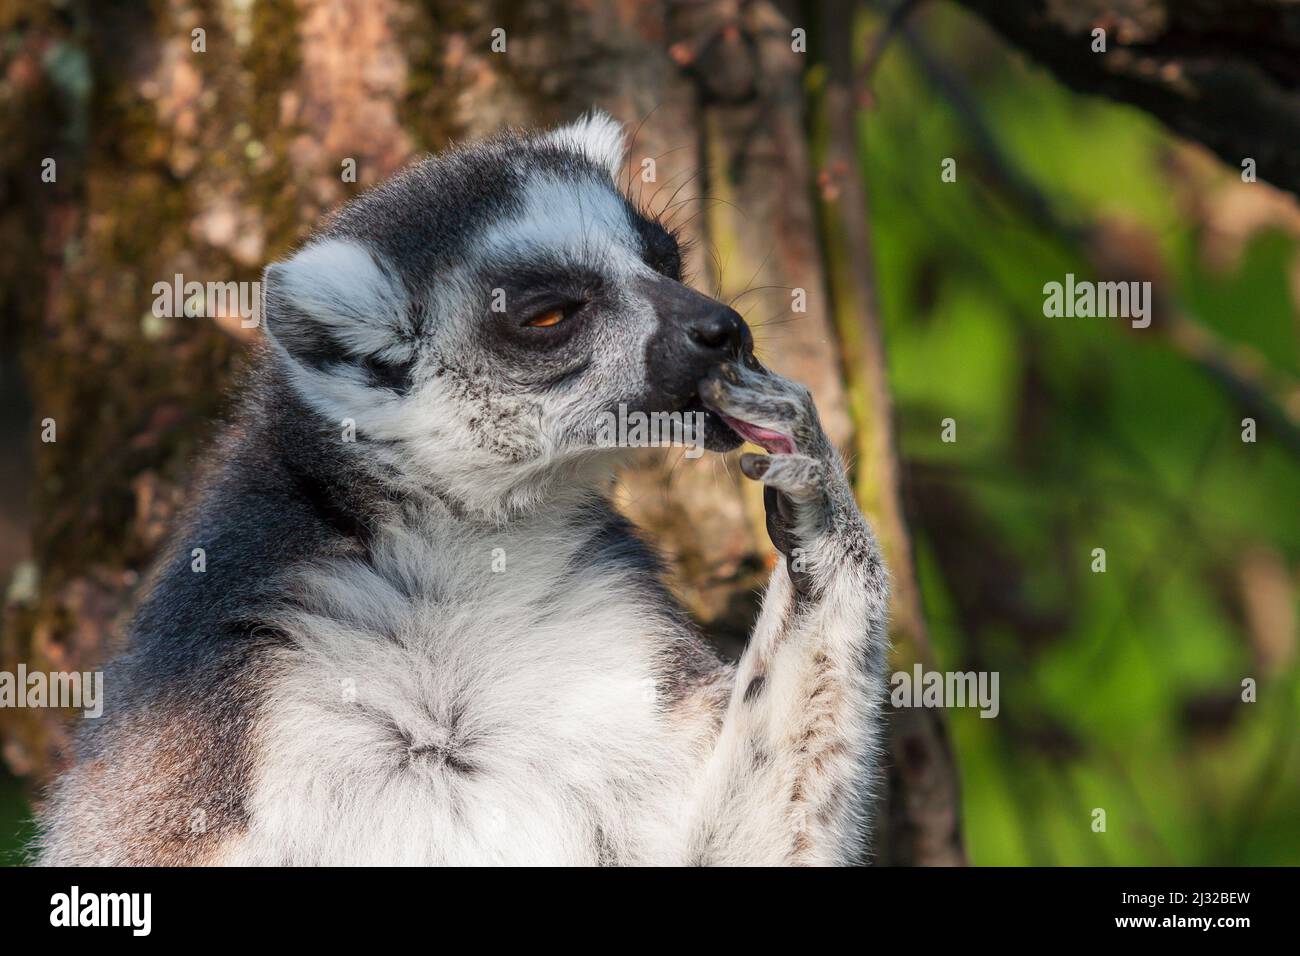 Portrait of Lemuriformes - Lemur in park with nice background Stock Photo